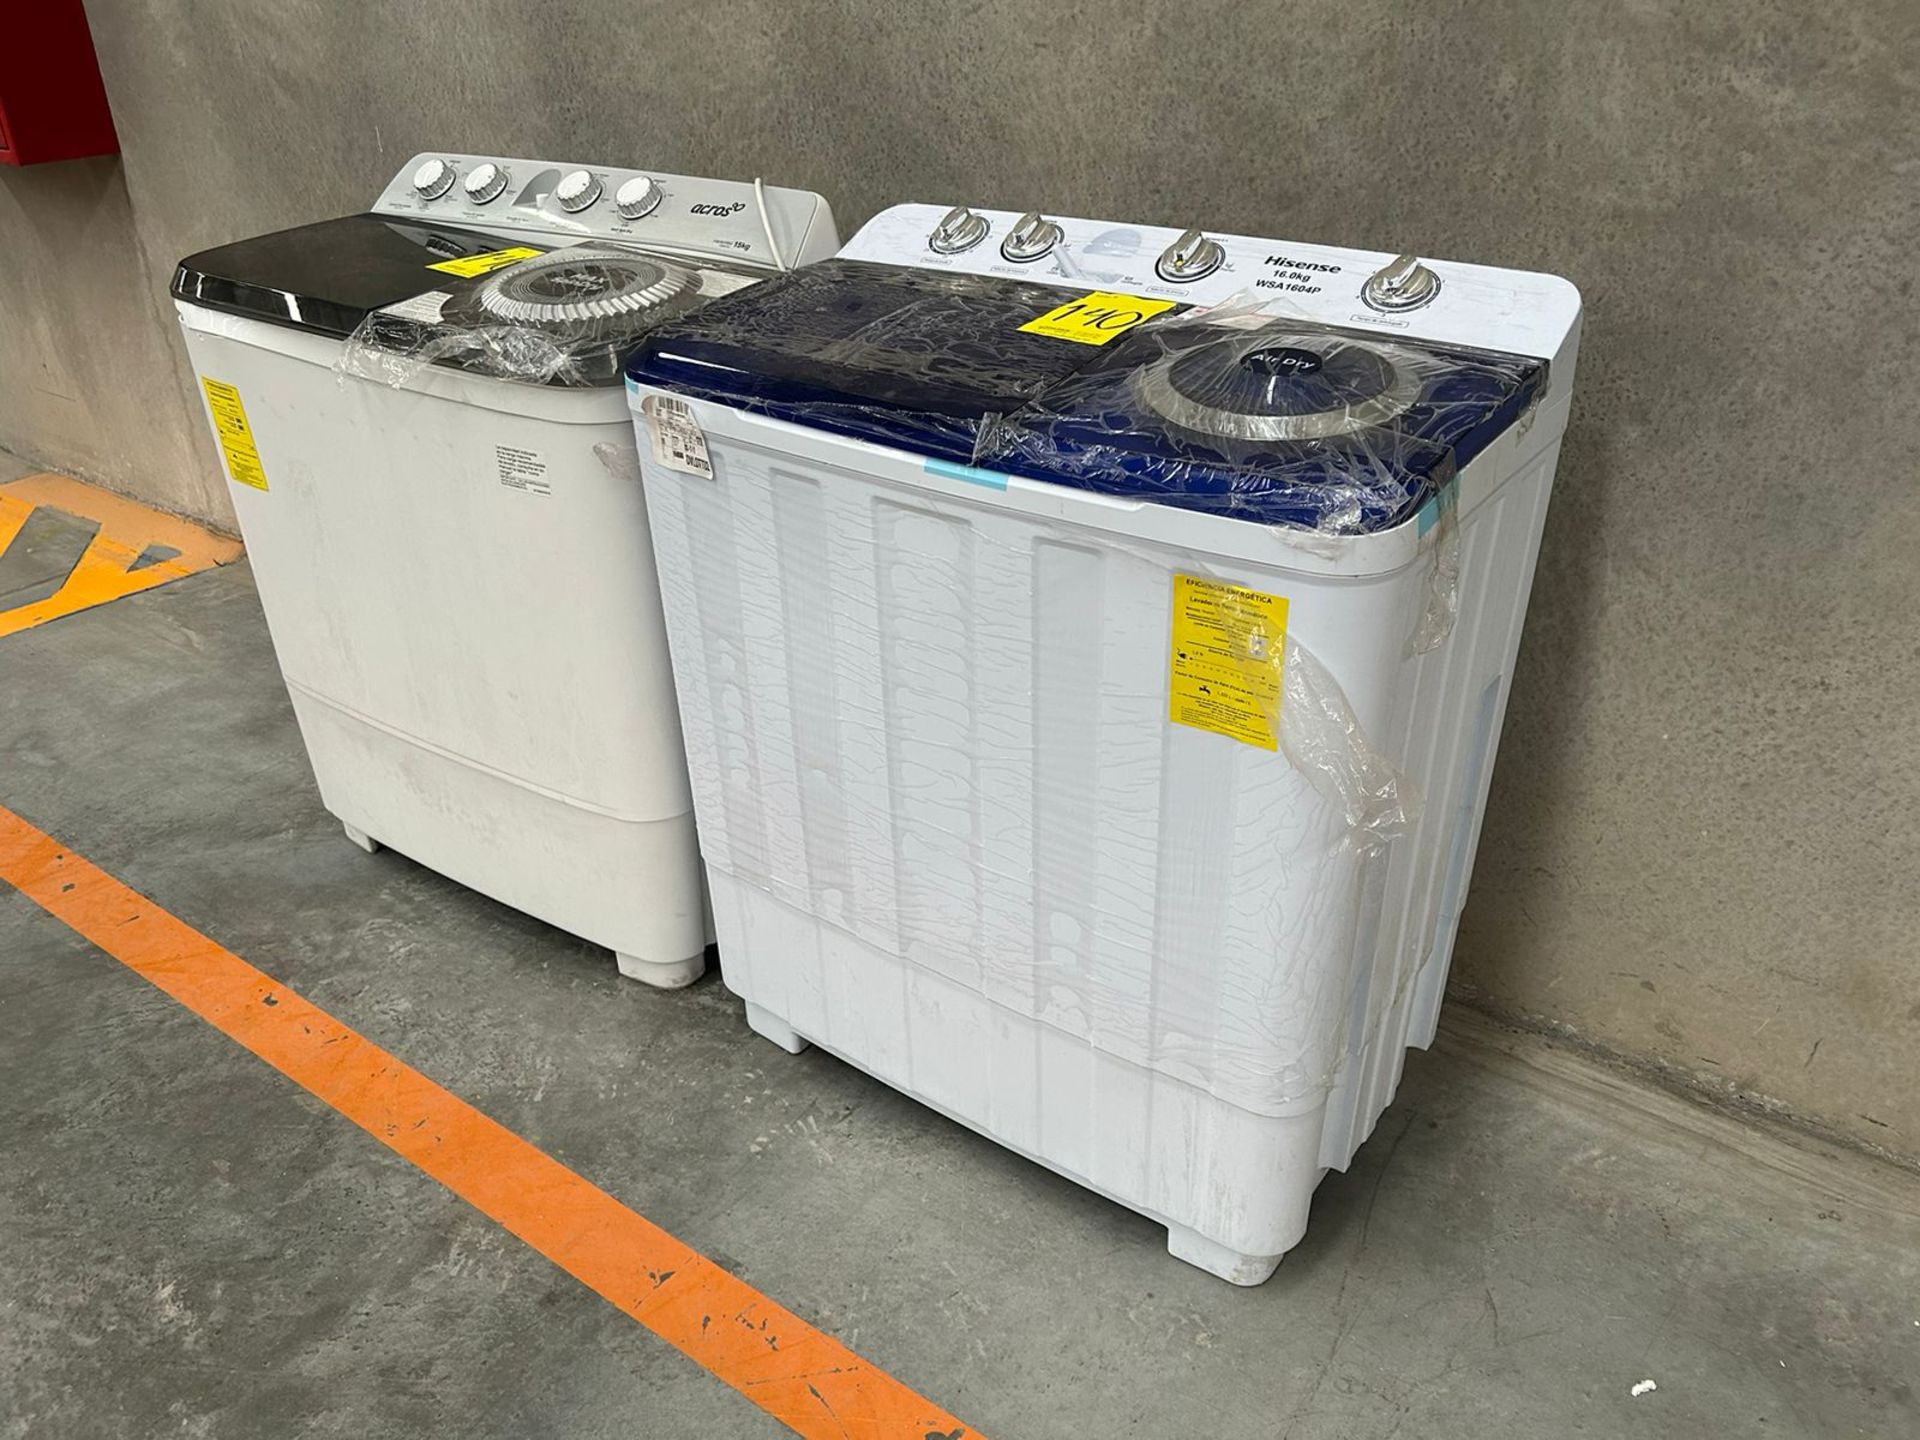 Lote de 2 lavadoras contiene: 1 Lavadora de 16 KG Marca HISENSE, Modelo WSA1604P, Serie 30175, Colo - Image 2 of 6